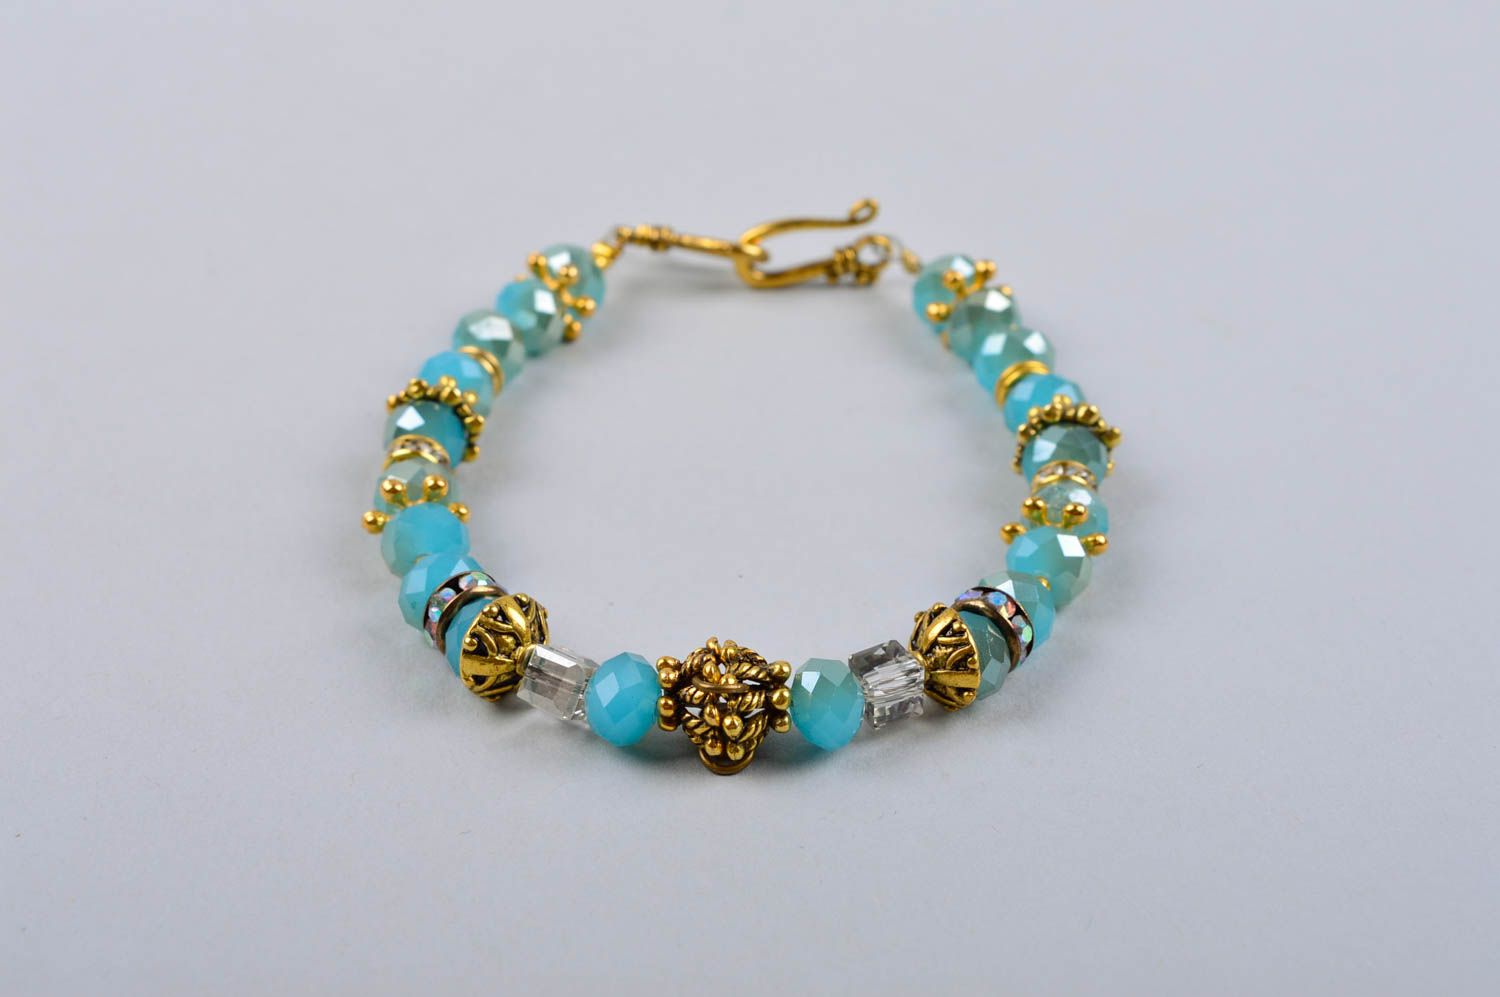 Crystal beads charm bracelet in light blue color for teen girls photo 3